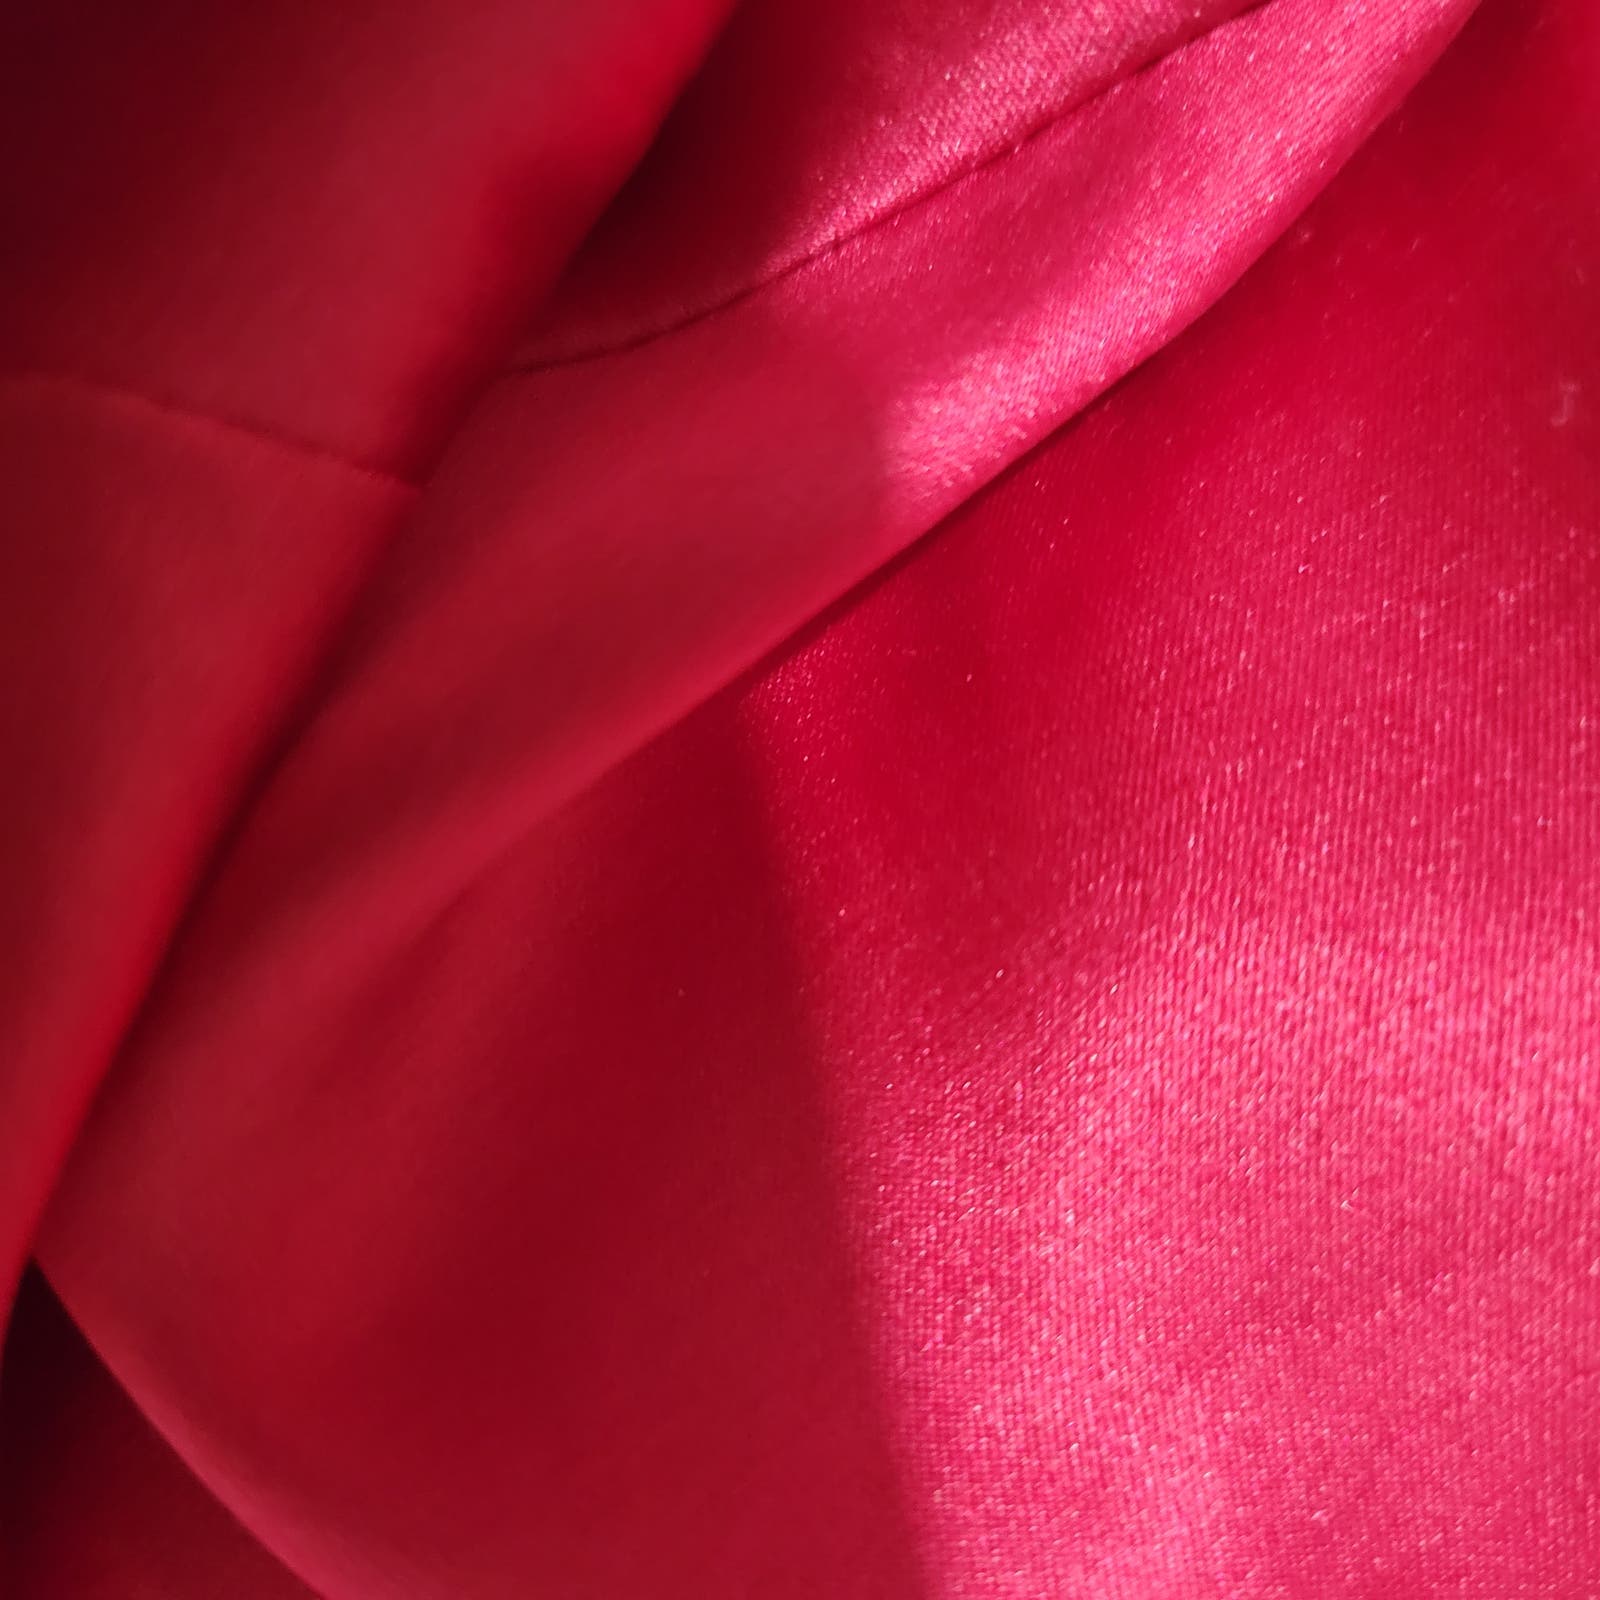 Victorias Secret Silk Pajamas Red Cami Top Shorts Set Tap Pants Heart Satin Lingerie Gold Label Size XS